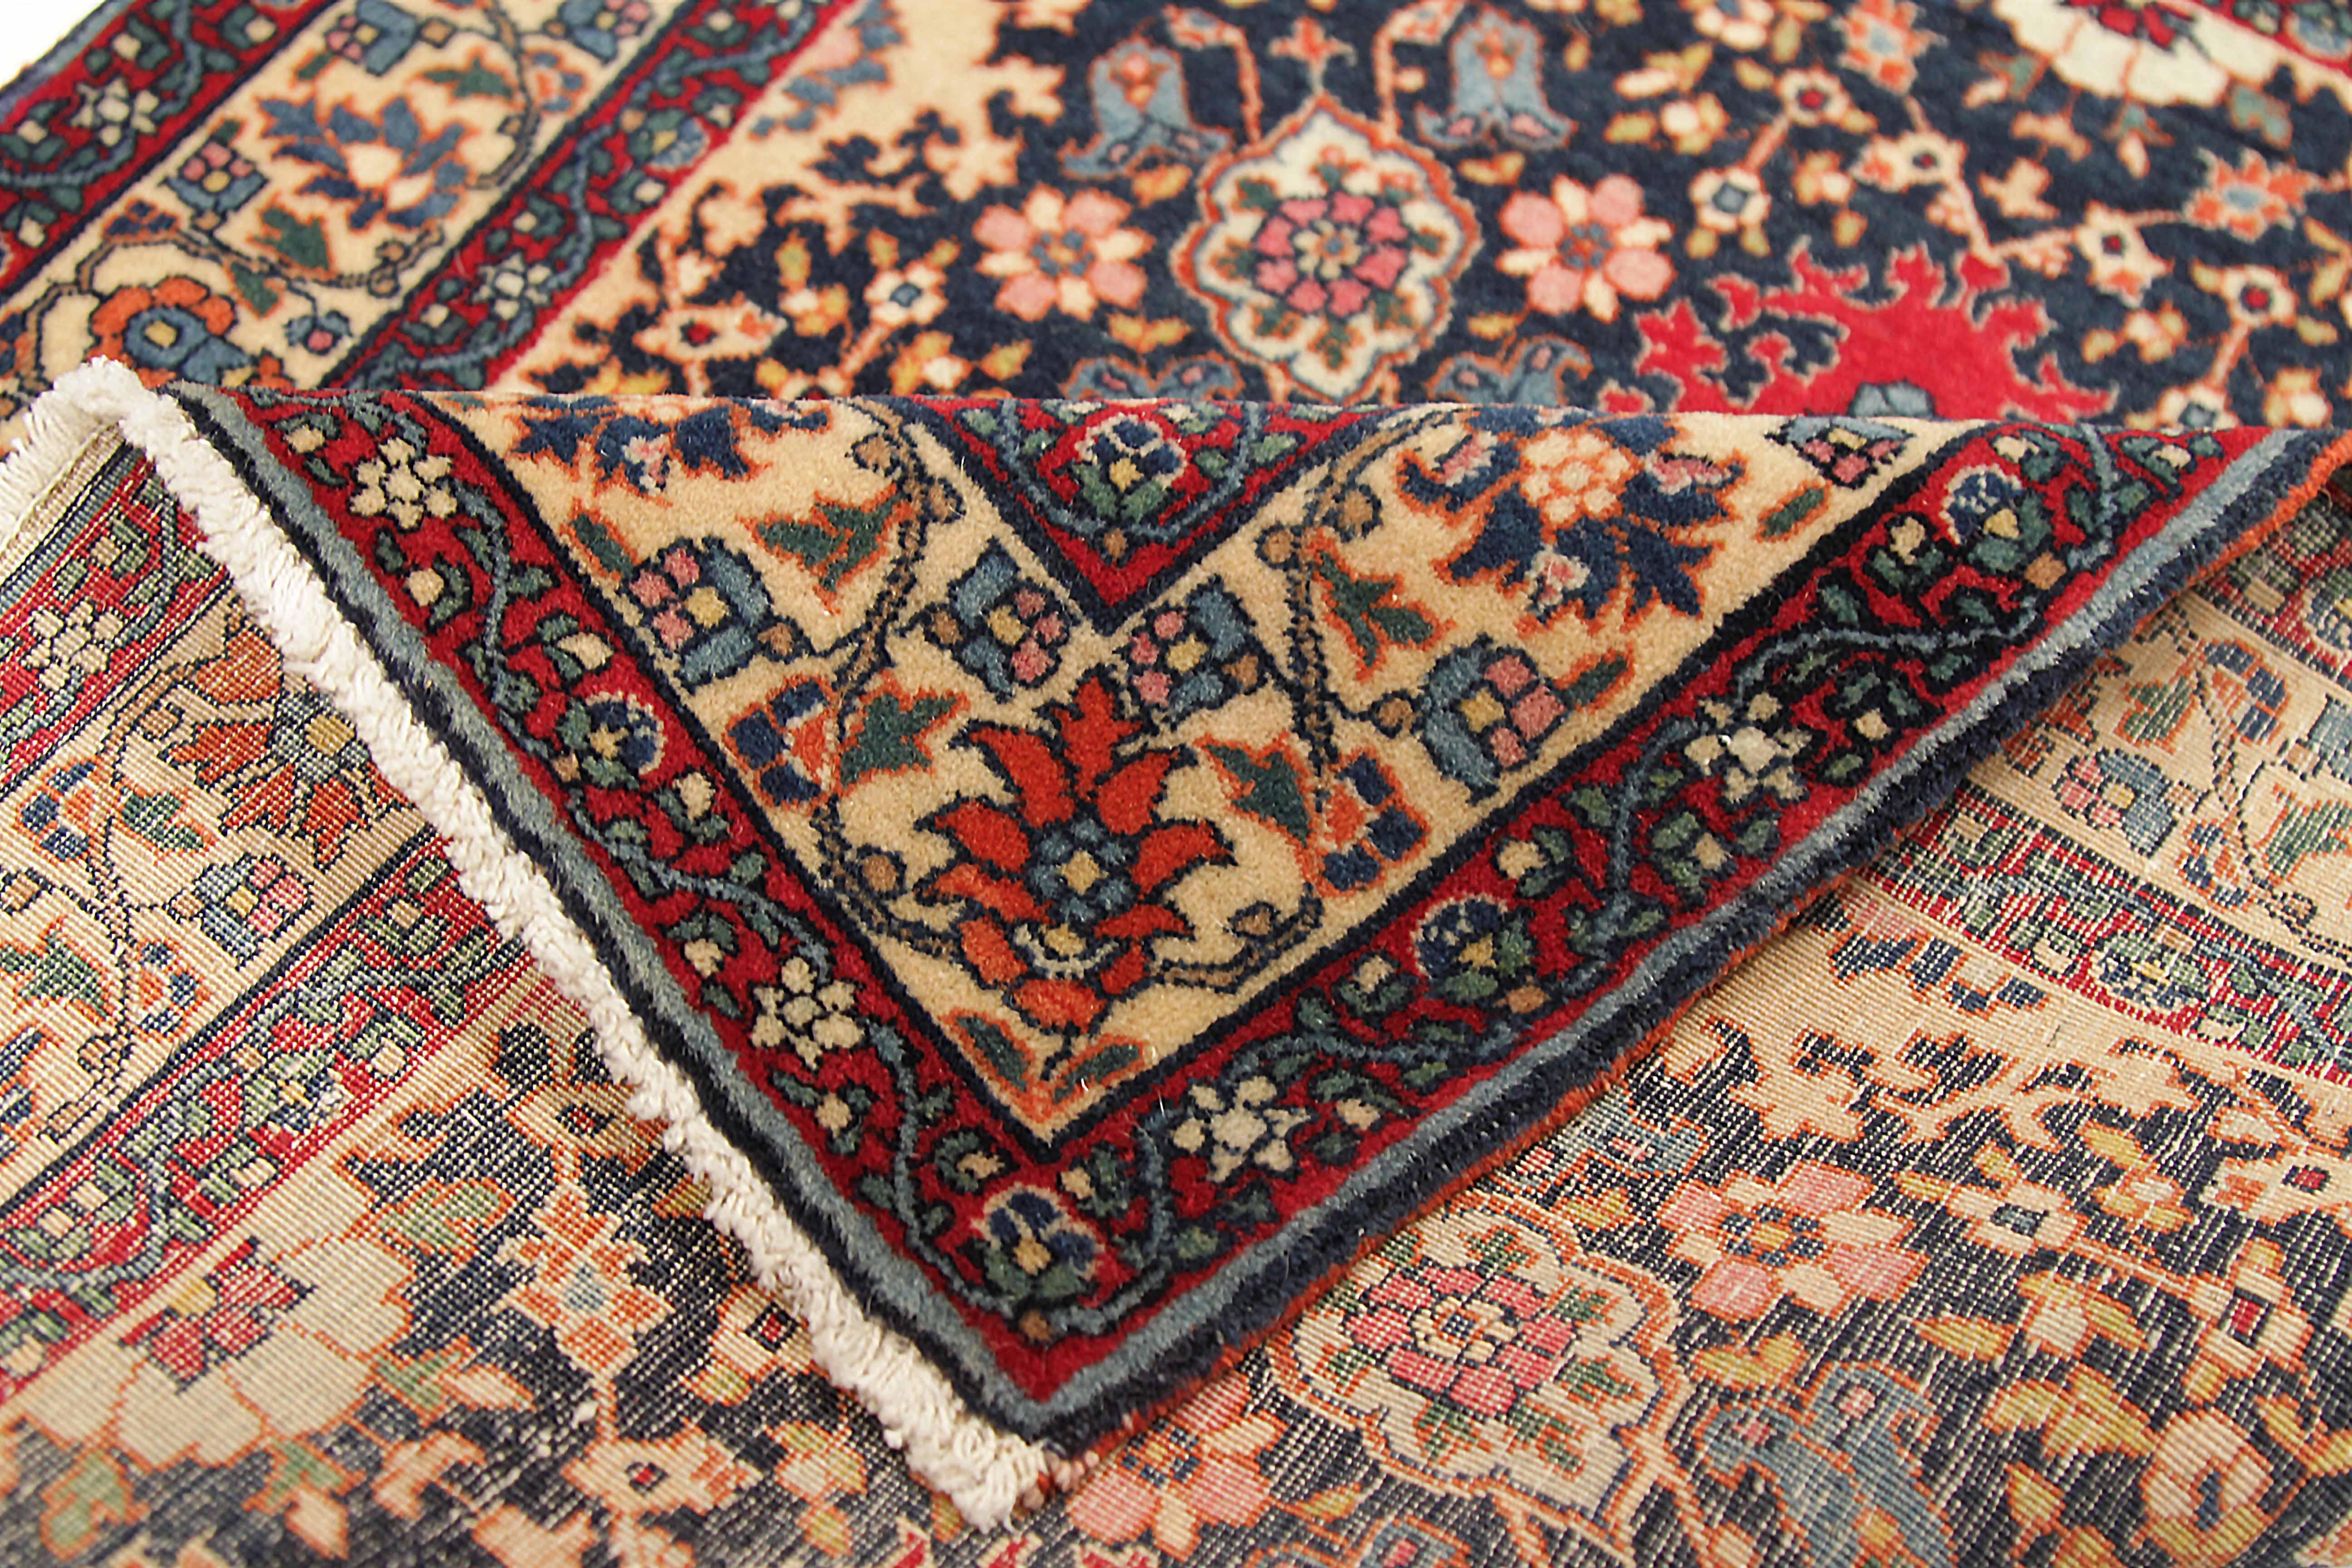 Antique Persian Square Rug Tehran Design In Excellent Condition For Sale In Dallas, TX